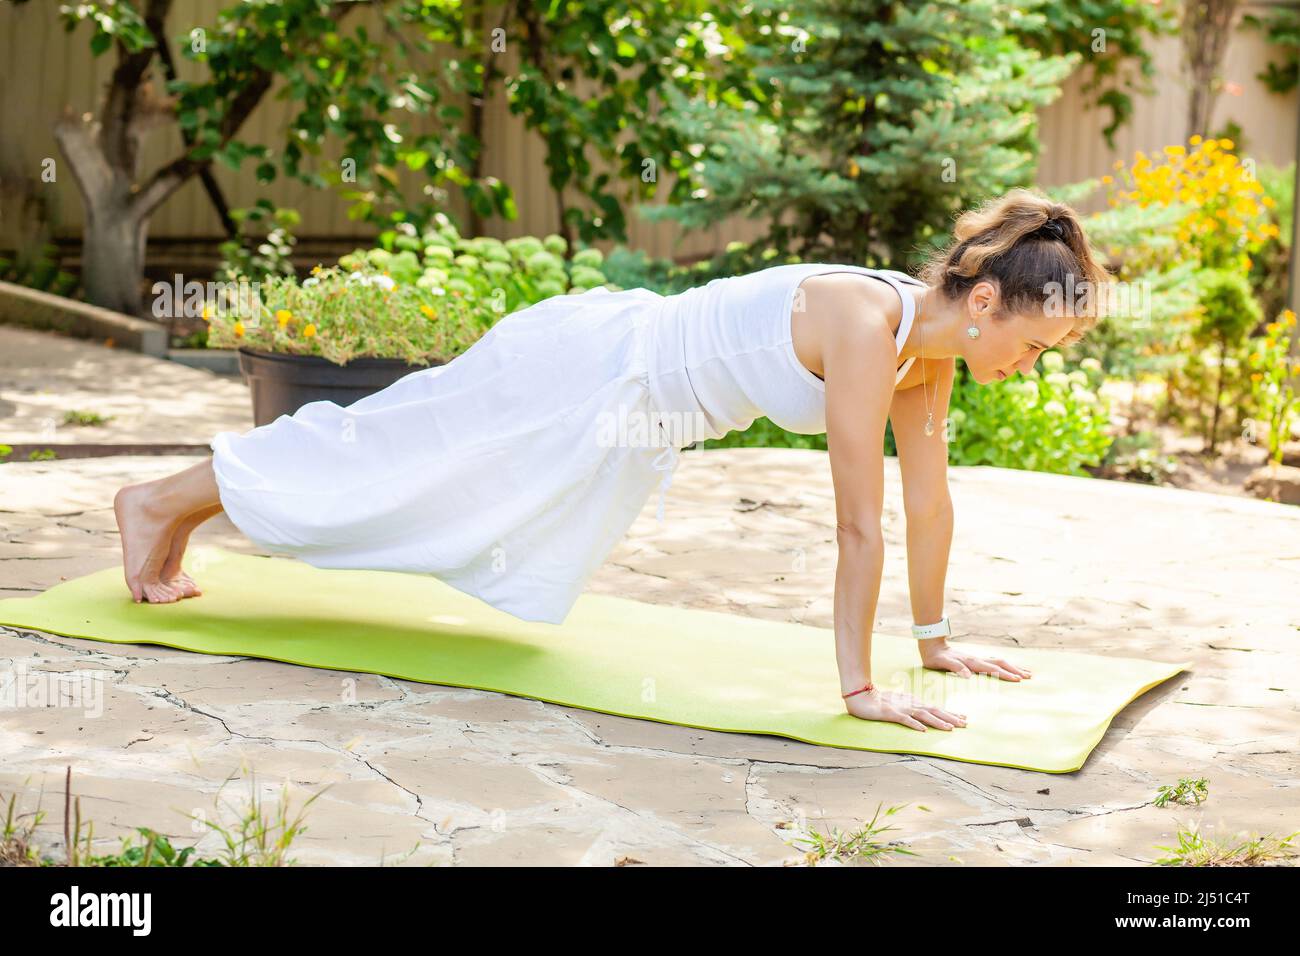 Junge Frau praktiziert Yoga im Garten. Surya namaskar, Plank Übung. Oberer Chaturanga dandasana, Kumbhakasana - die Plank-Pose Stockfoto